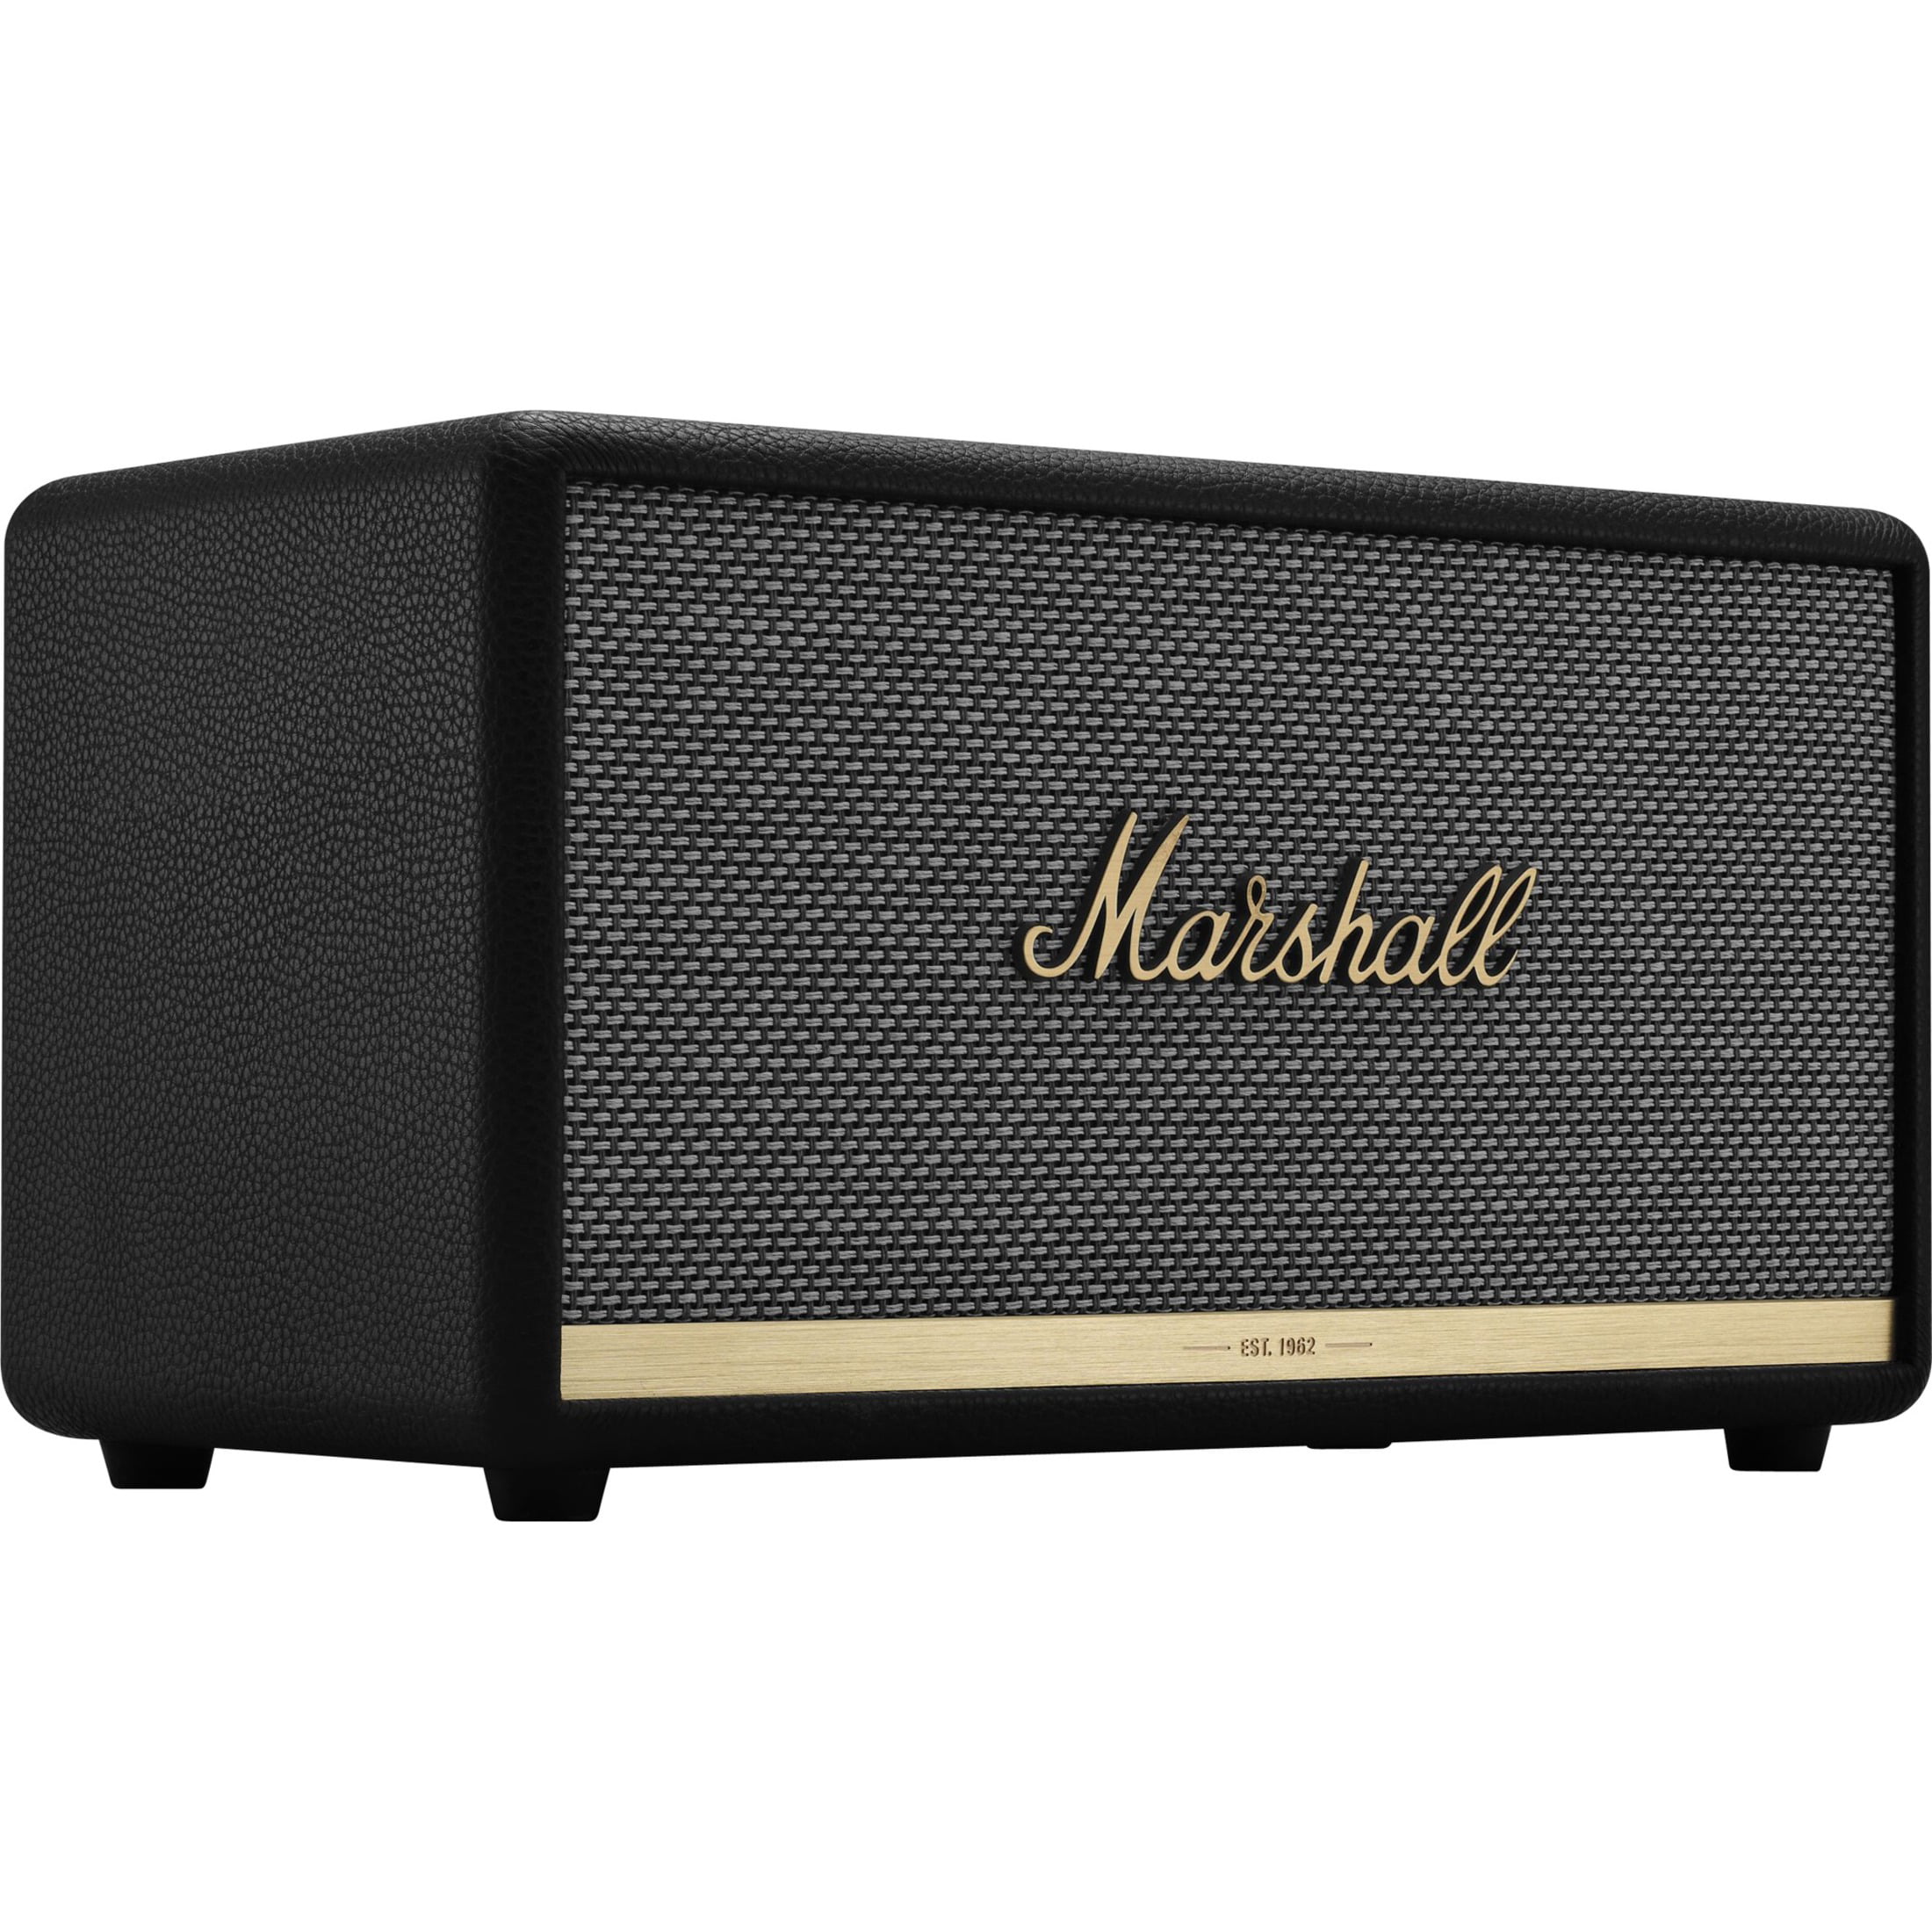 marshall stanmore ii wireless bluetooth speaker, black - new 